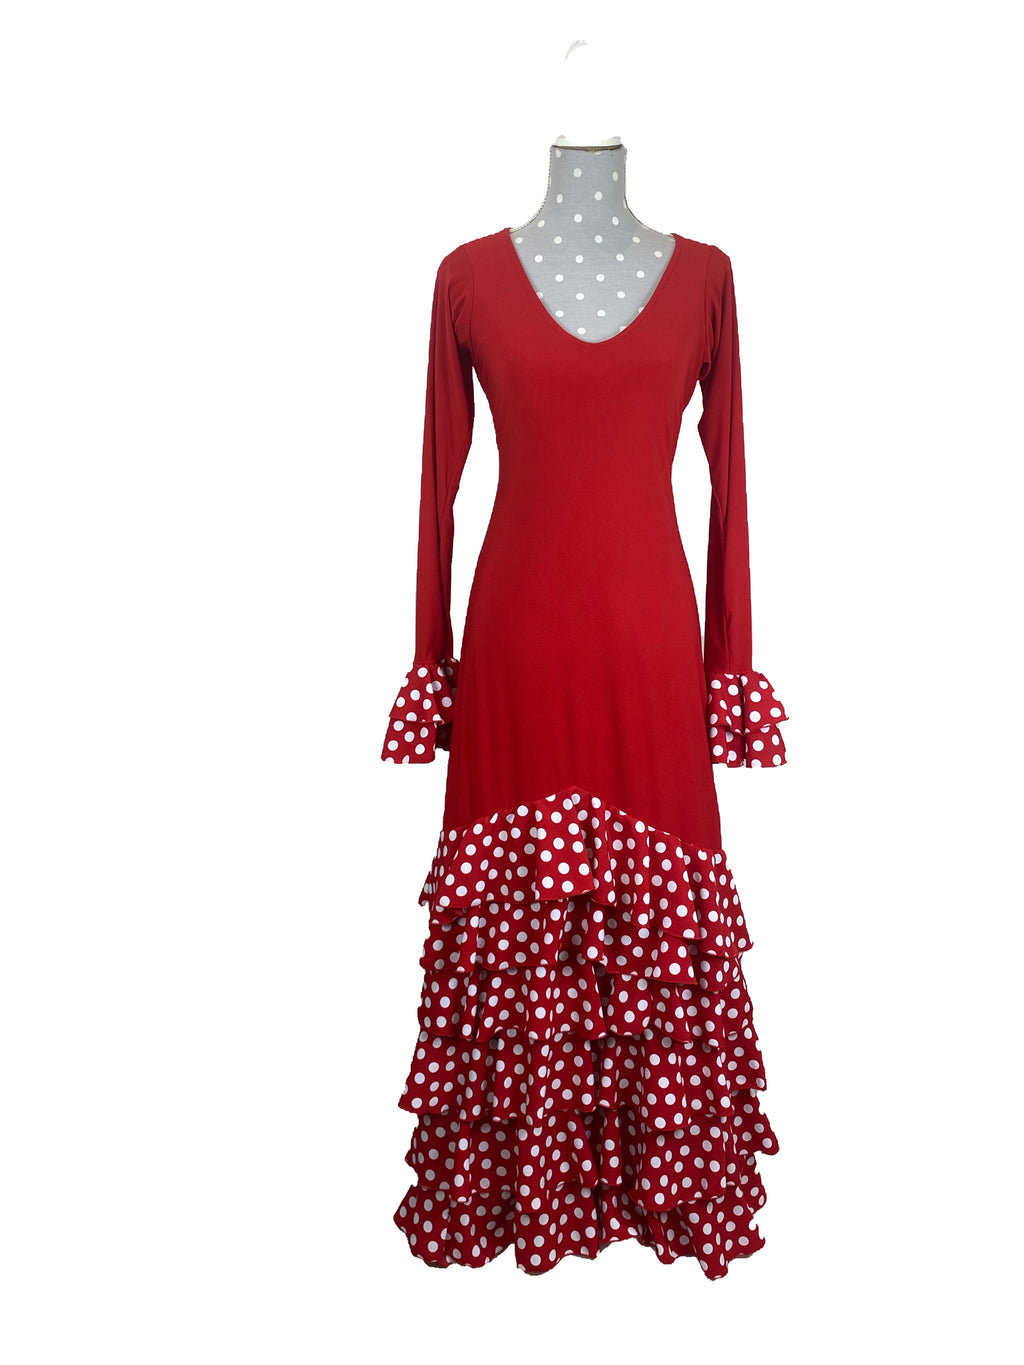 Vestido de baile flamenco de mujer, punto elástico , fabricación española.  -  México